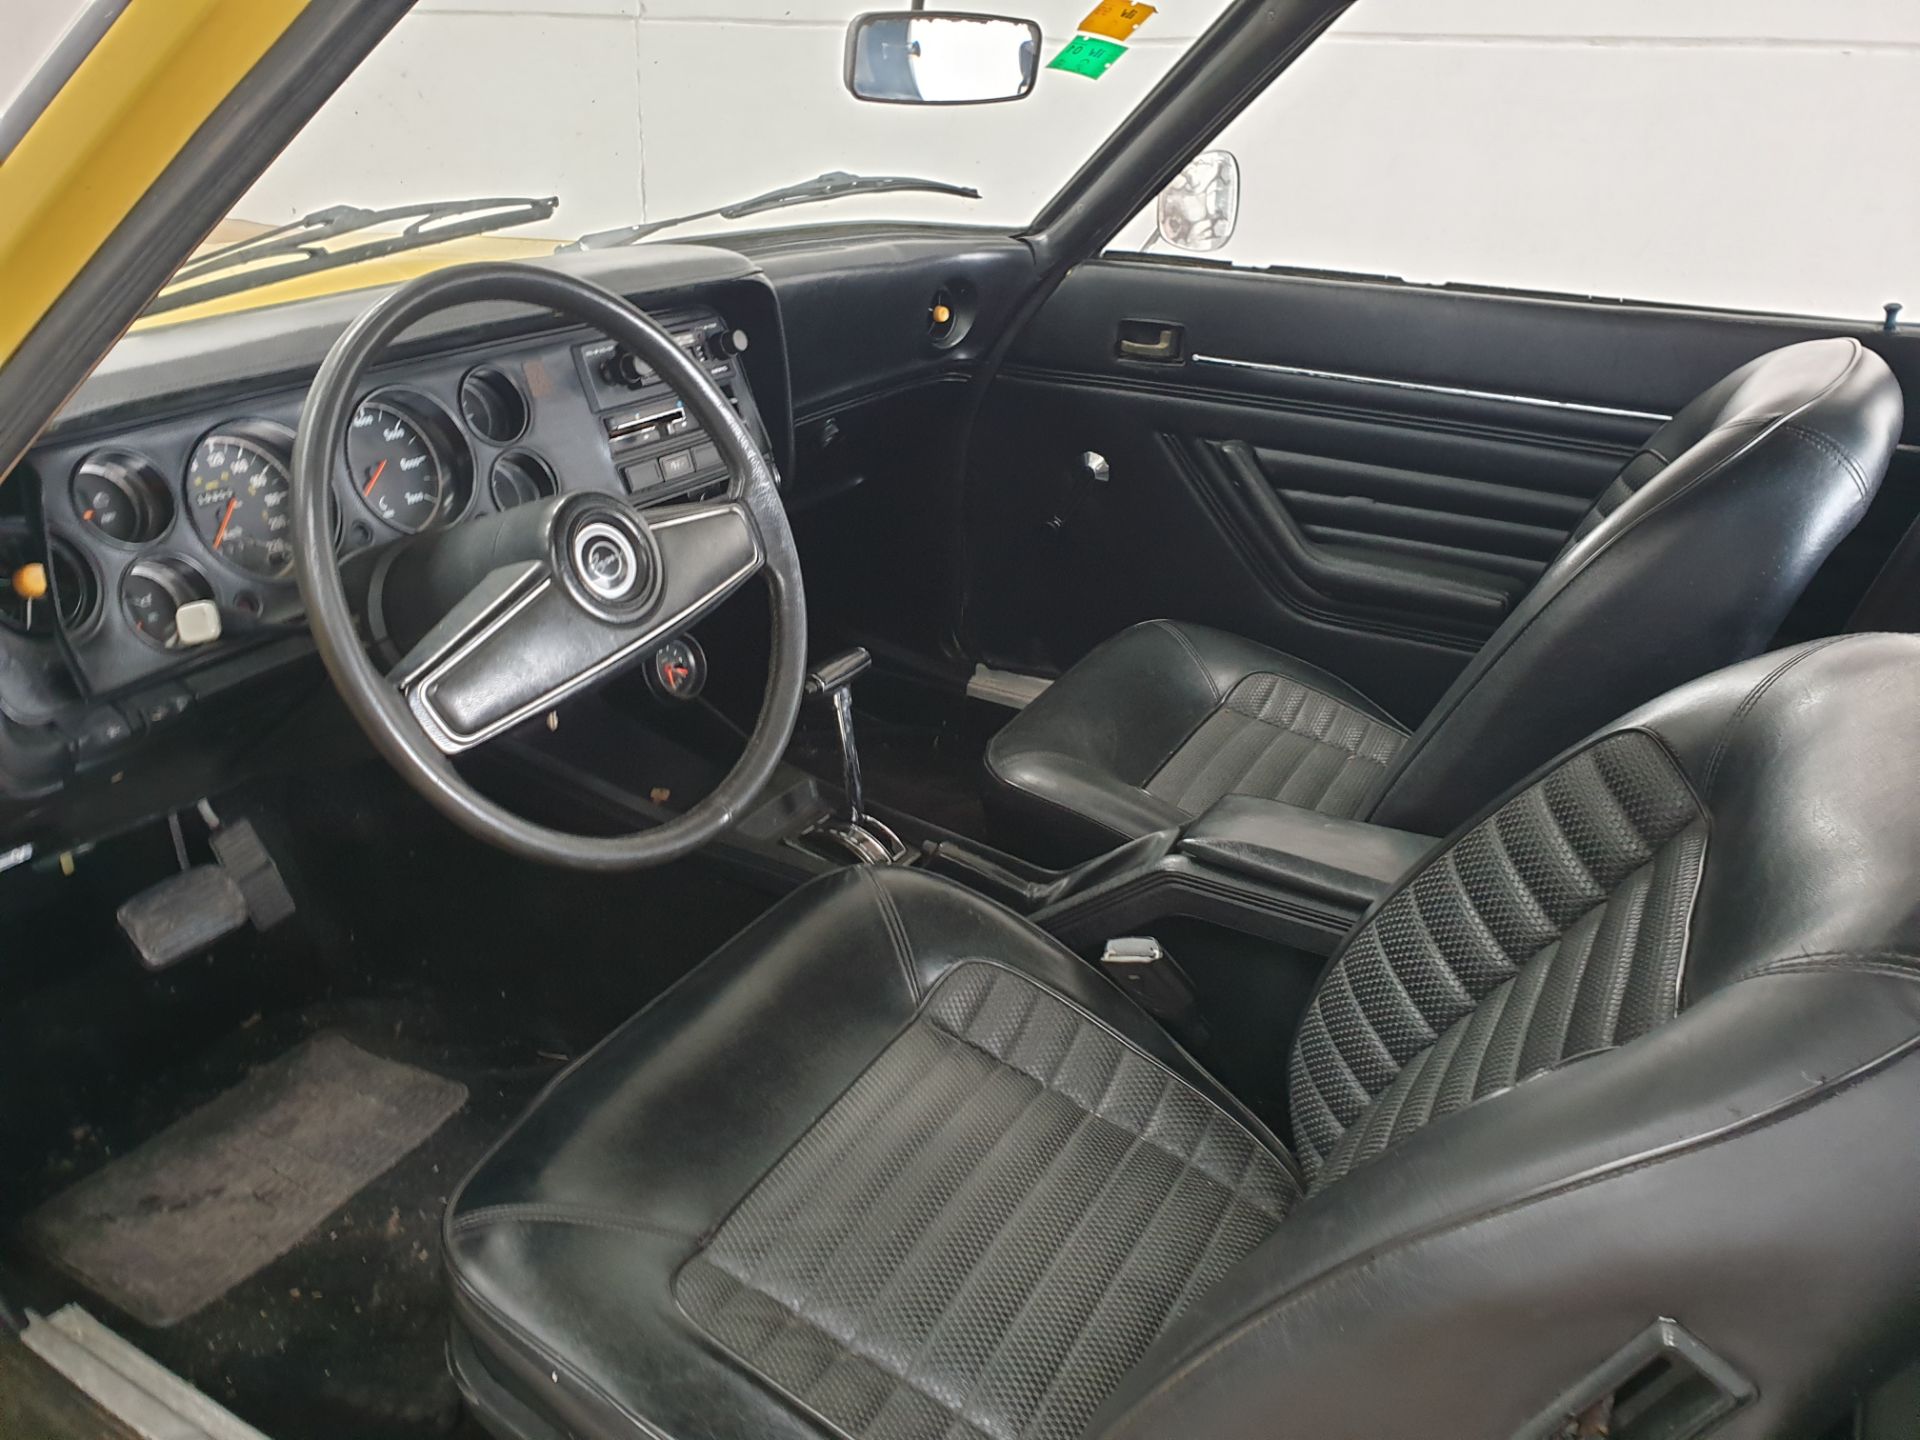 Ford Capri 3.0 V6 GT Mk1 - Image 9 of 15